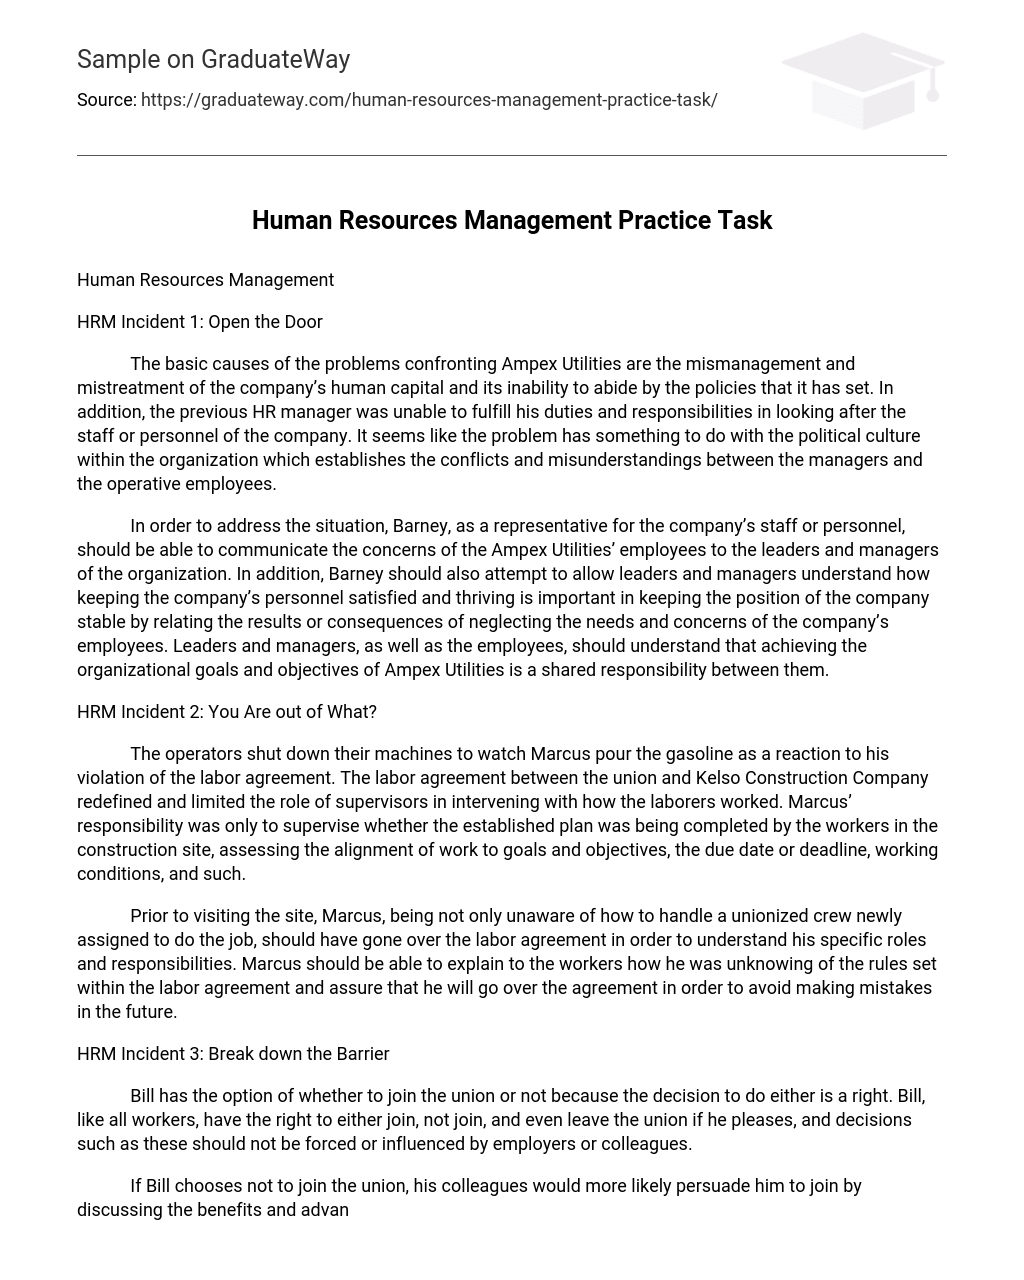 Human Resources Management Practice Task